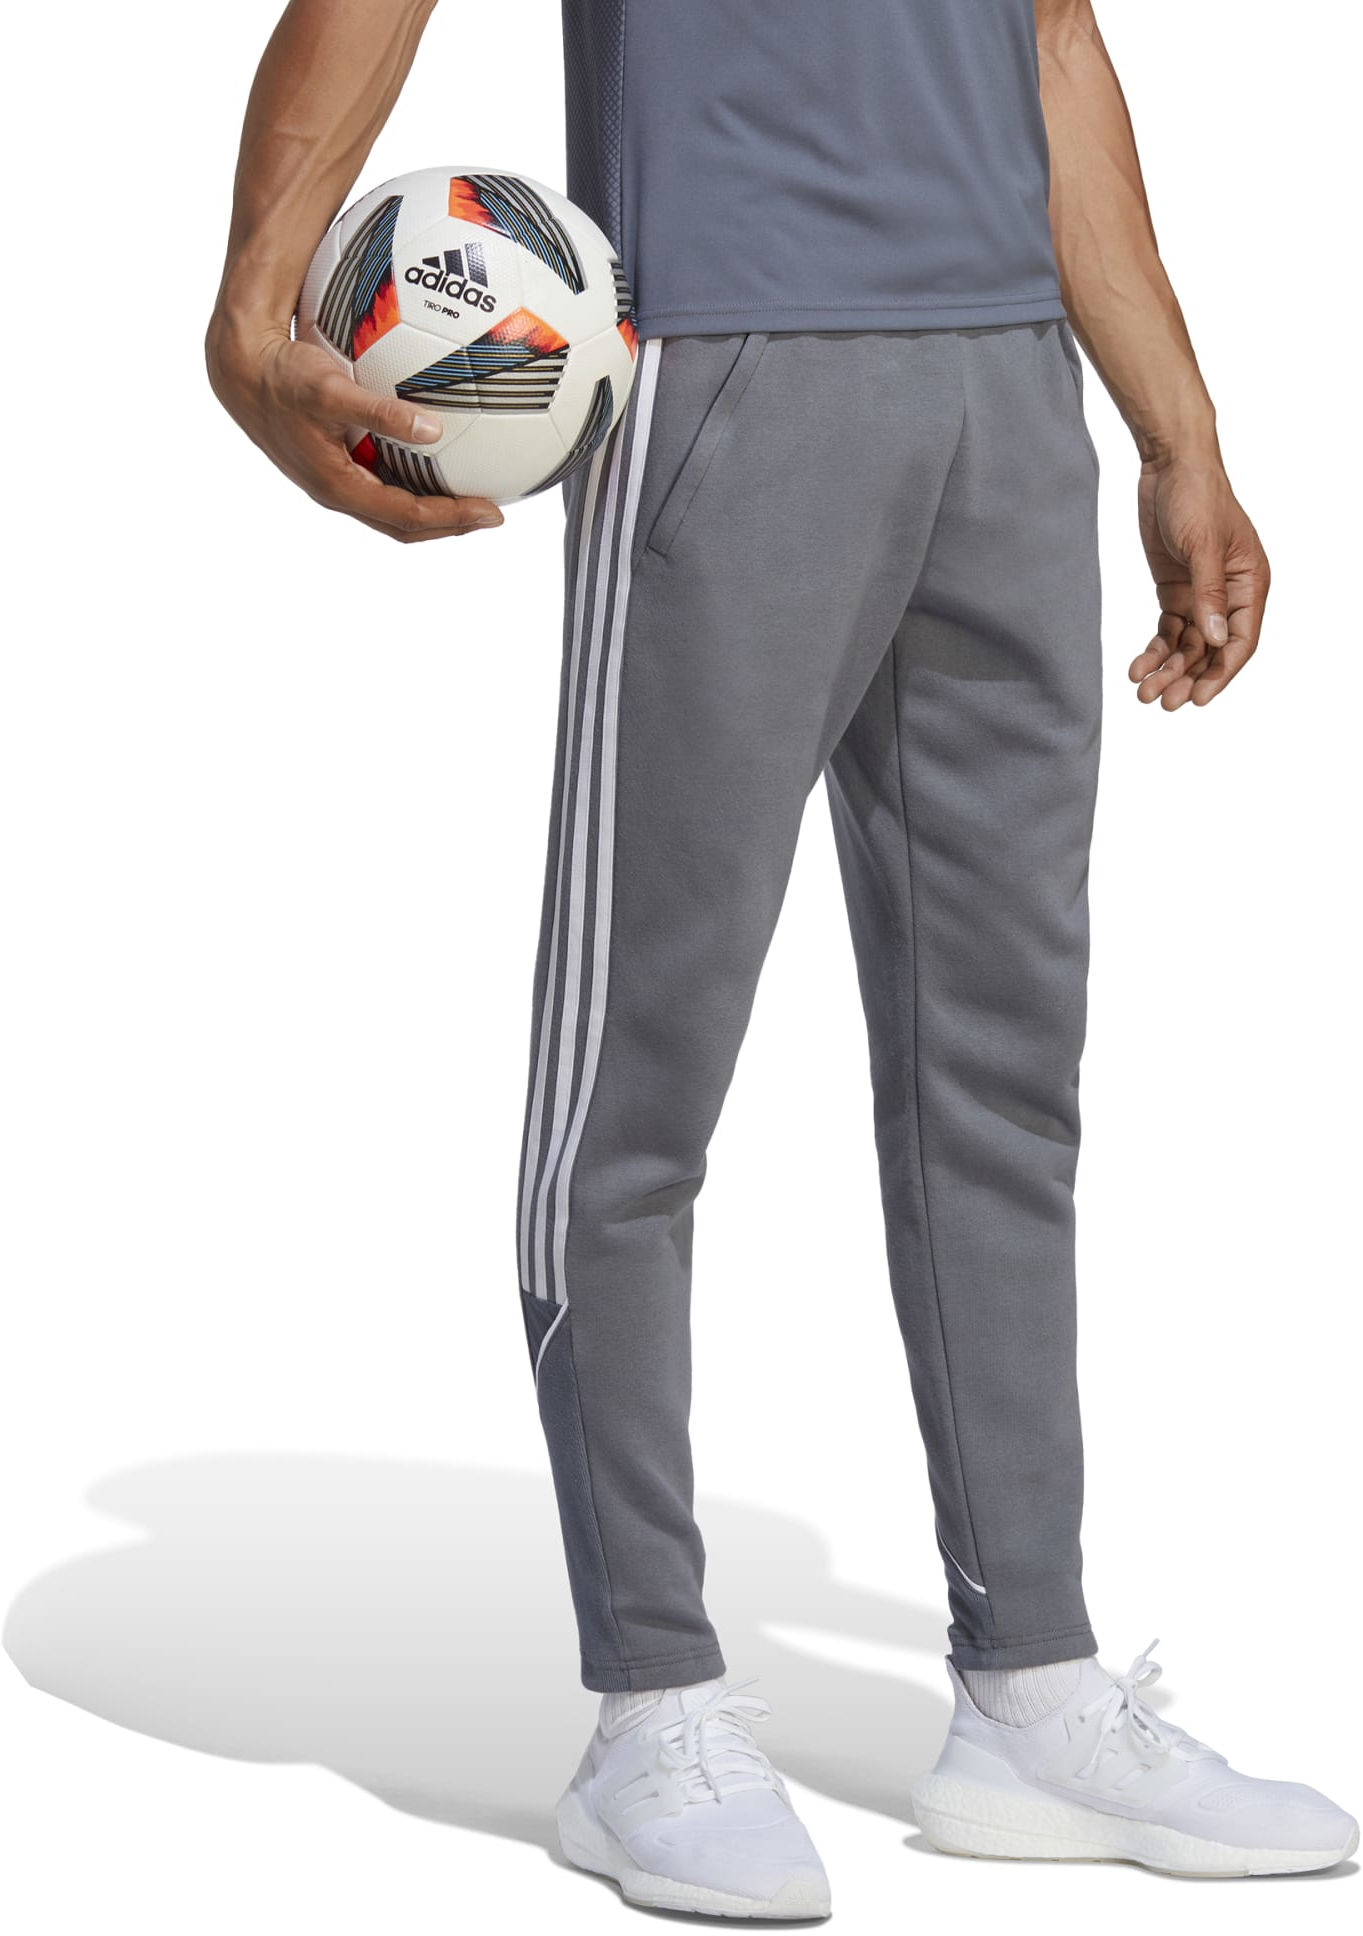 Adidas Men's Soccer Tiro 21 Track Pants - Frank's Sports Shop